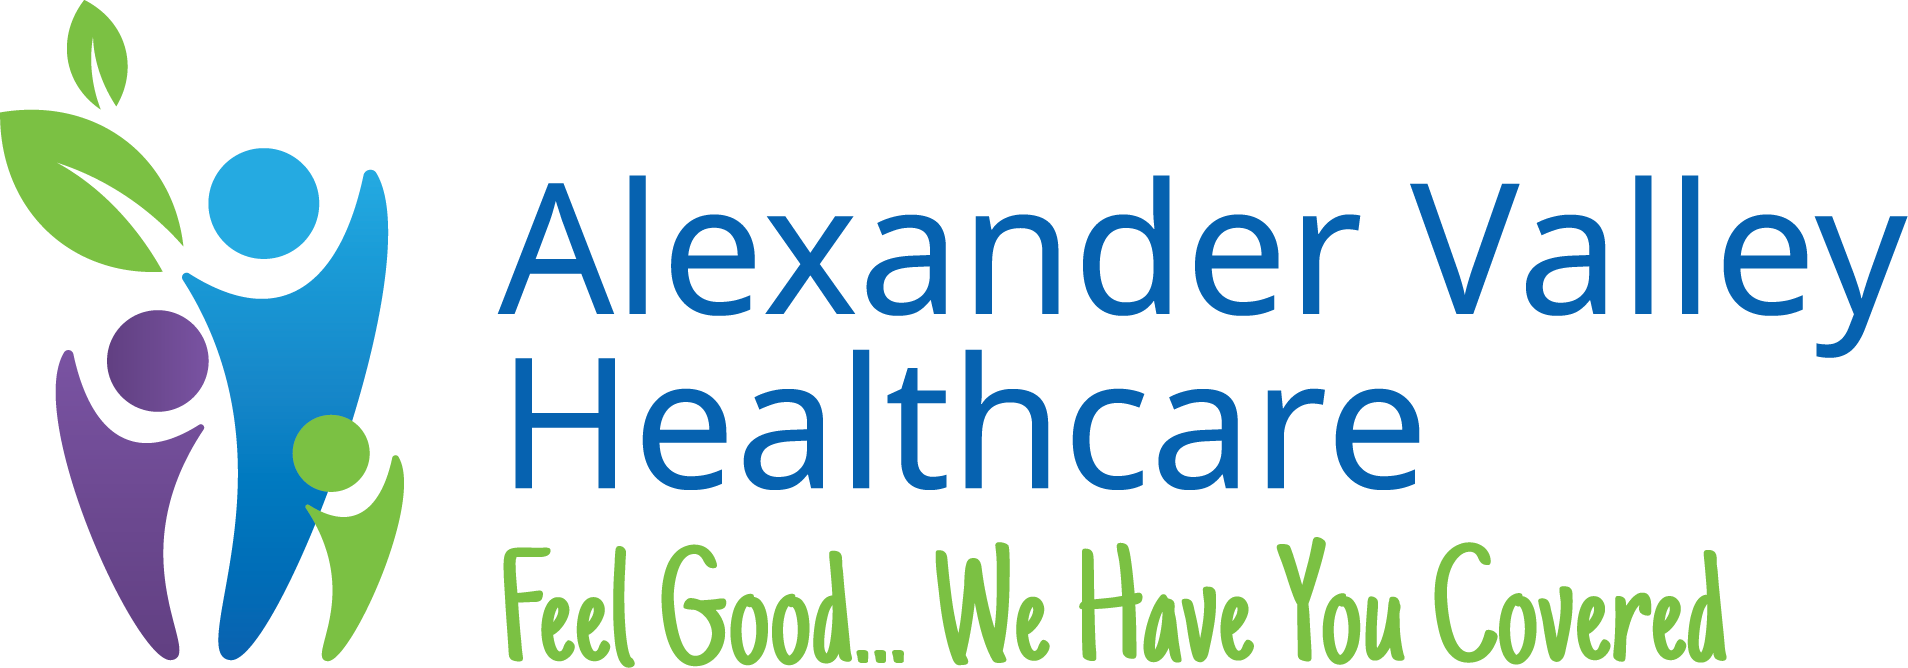 Alexander Valley Healthcare logo.png